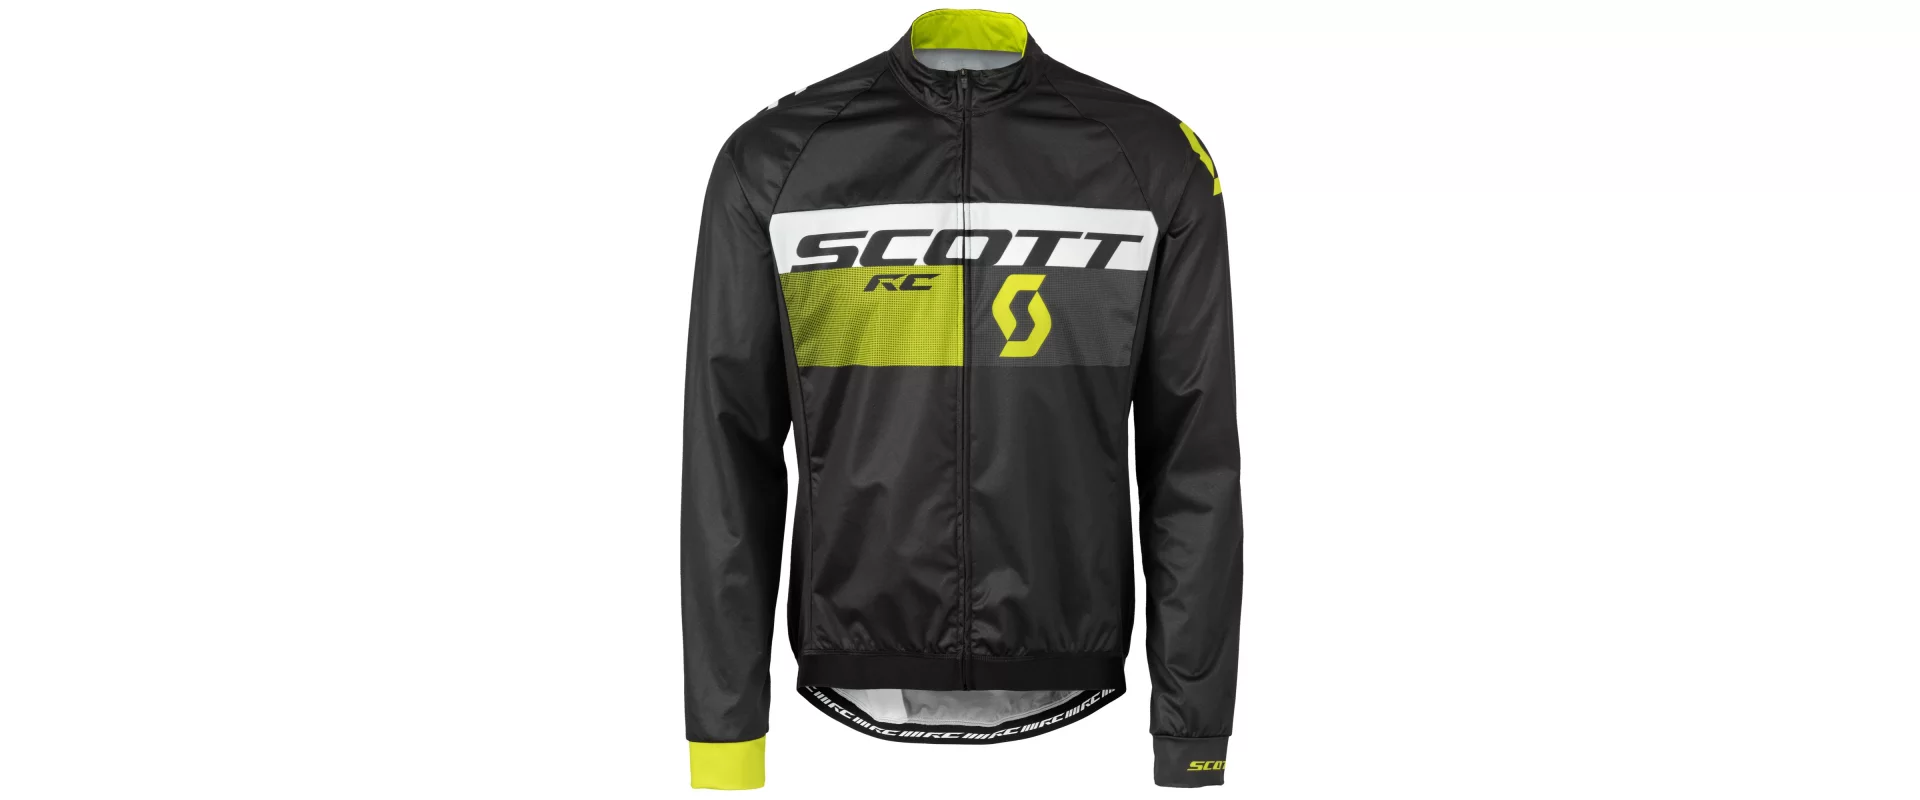 Scott Rc Pro Jacket Wb / Мужская велокуртка с ветрозащитой